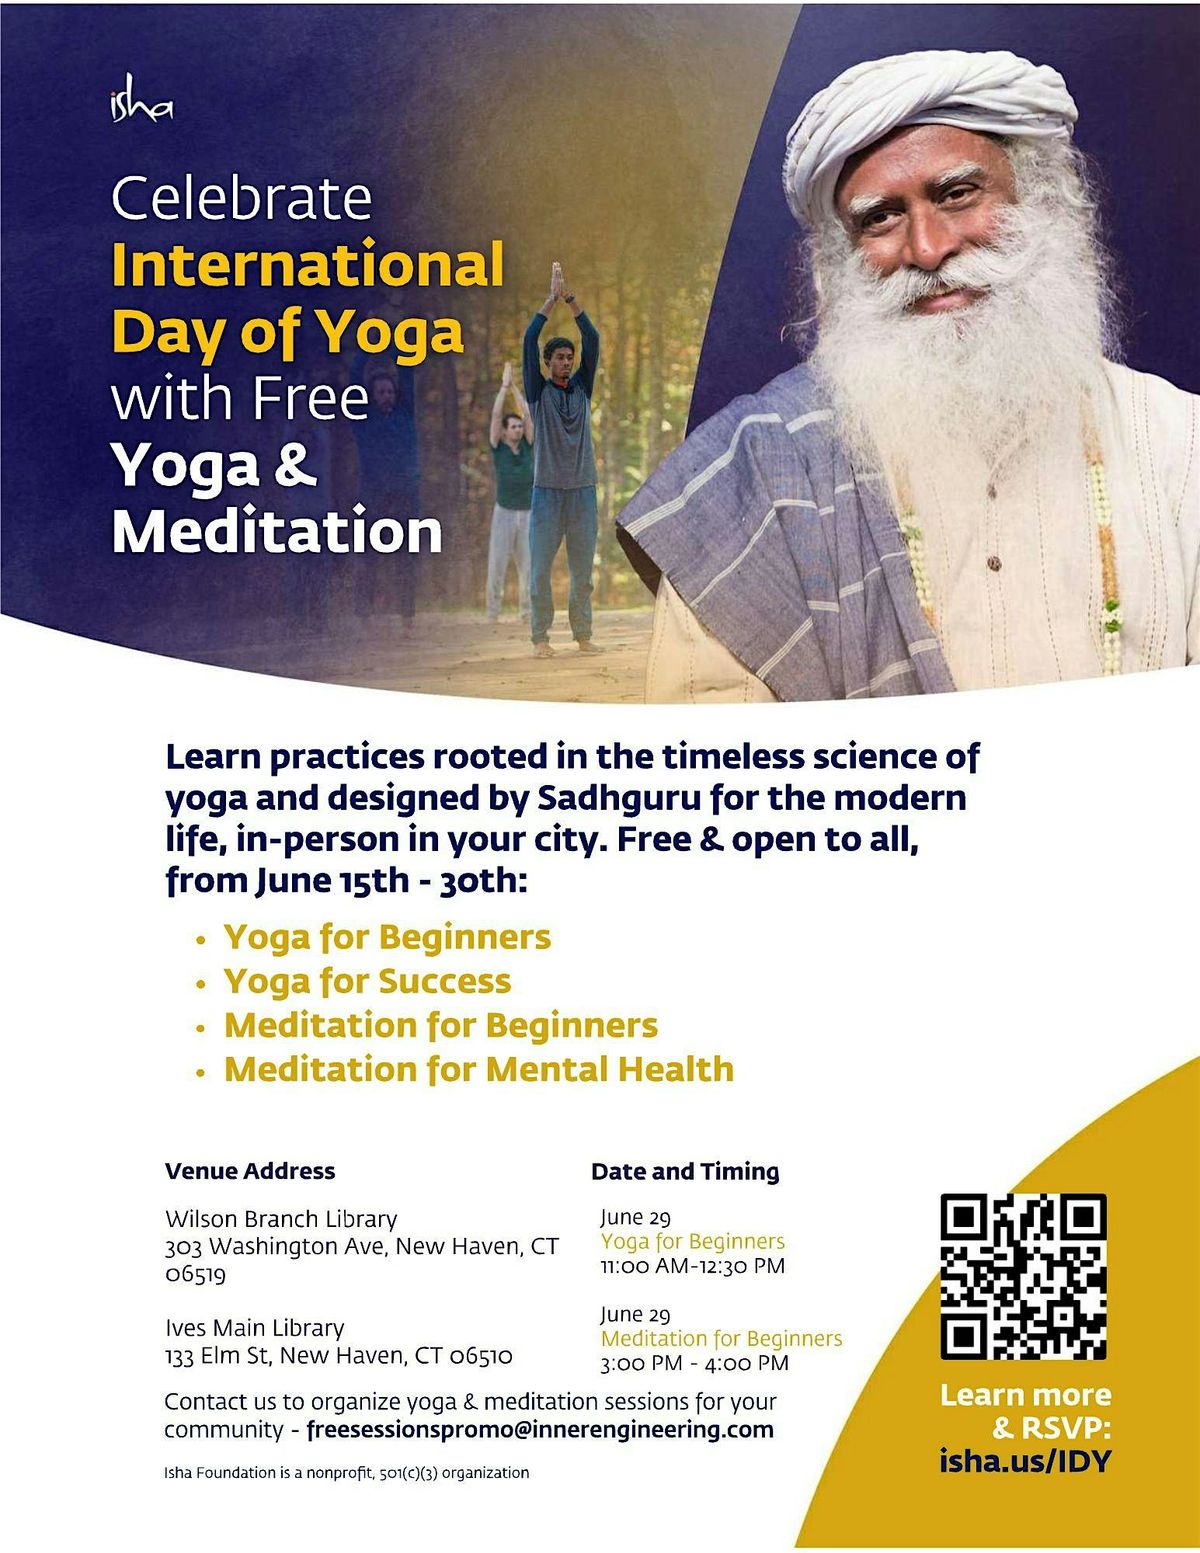 Free Yoga & Meditation Sessions